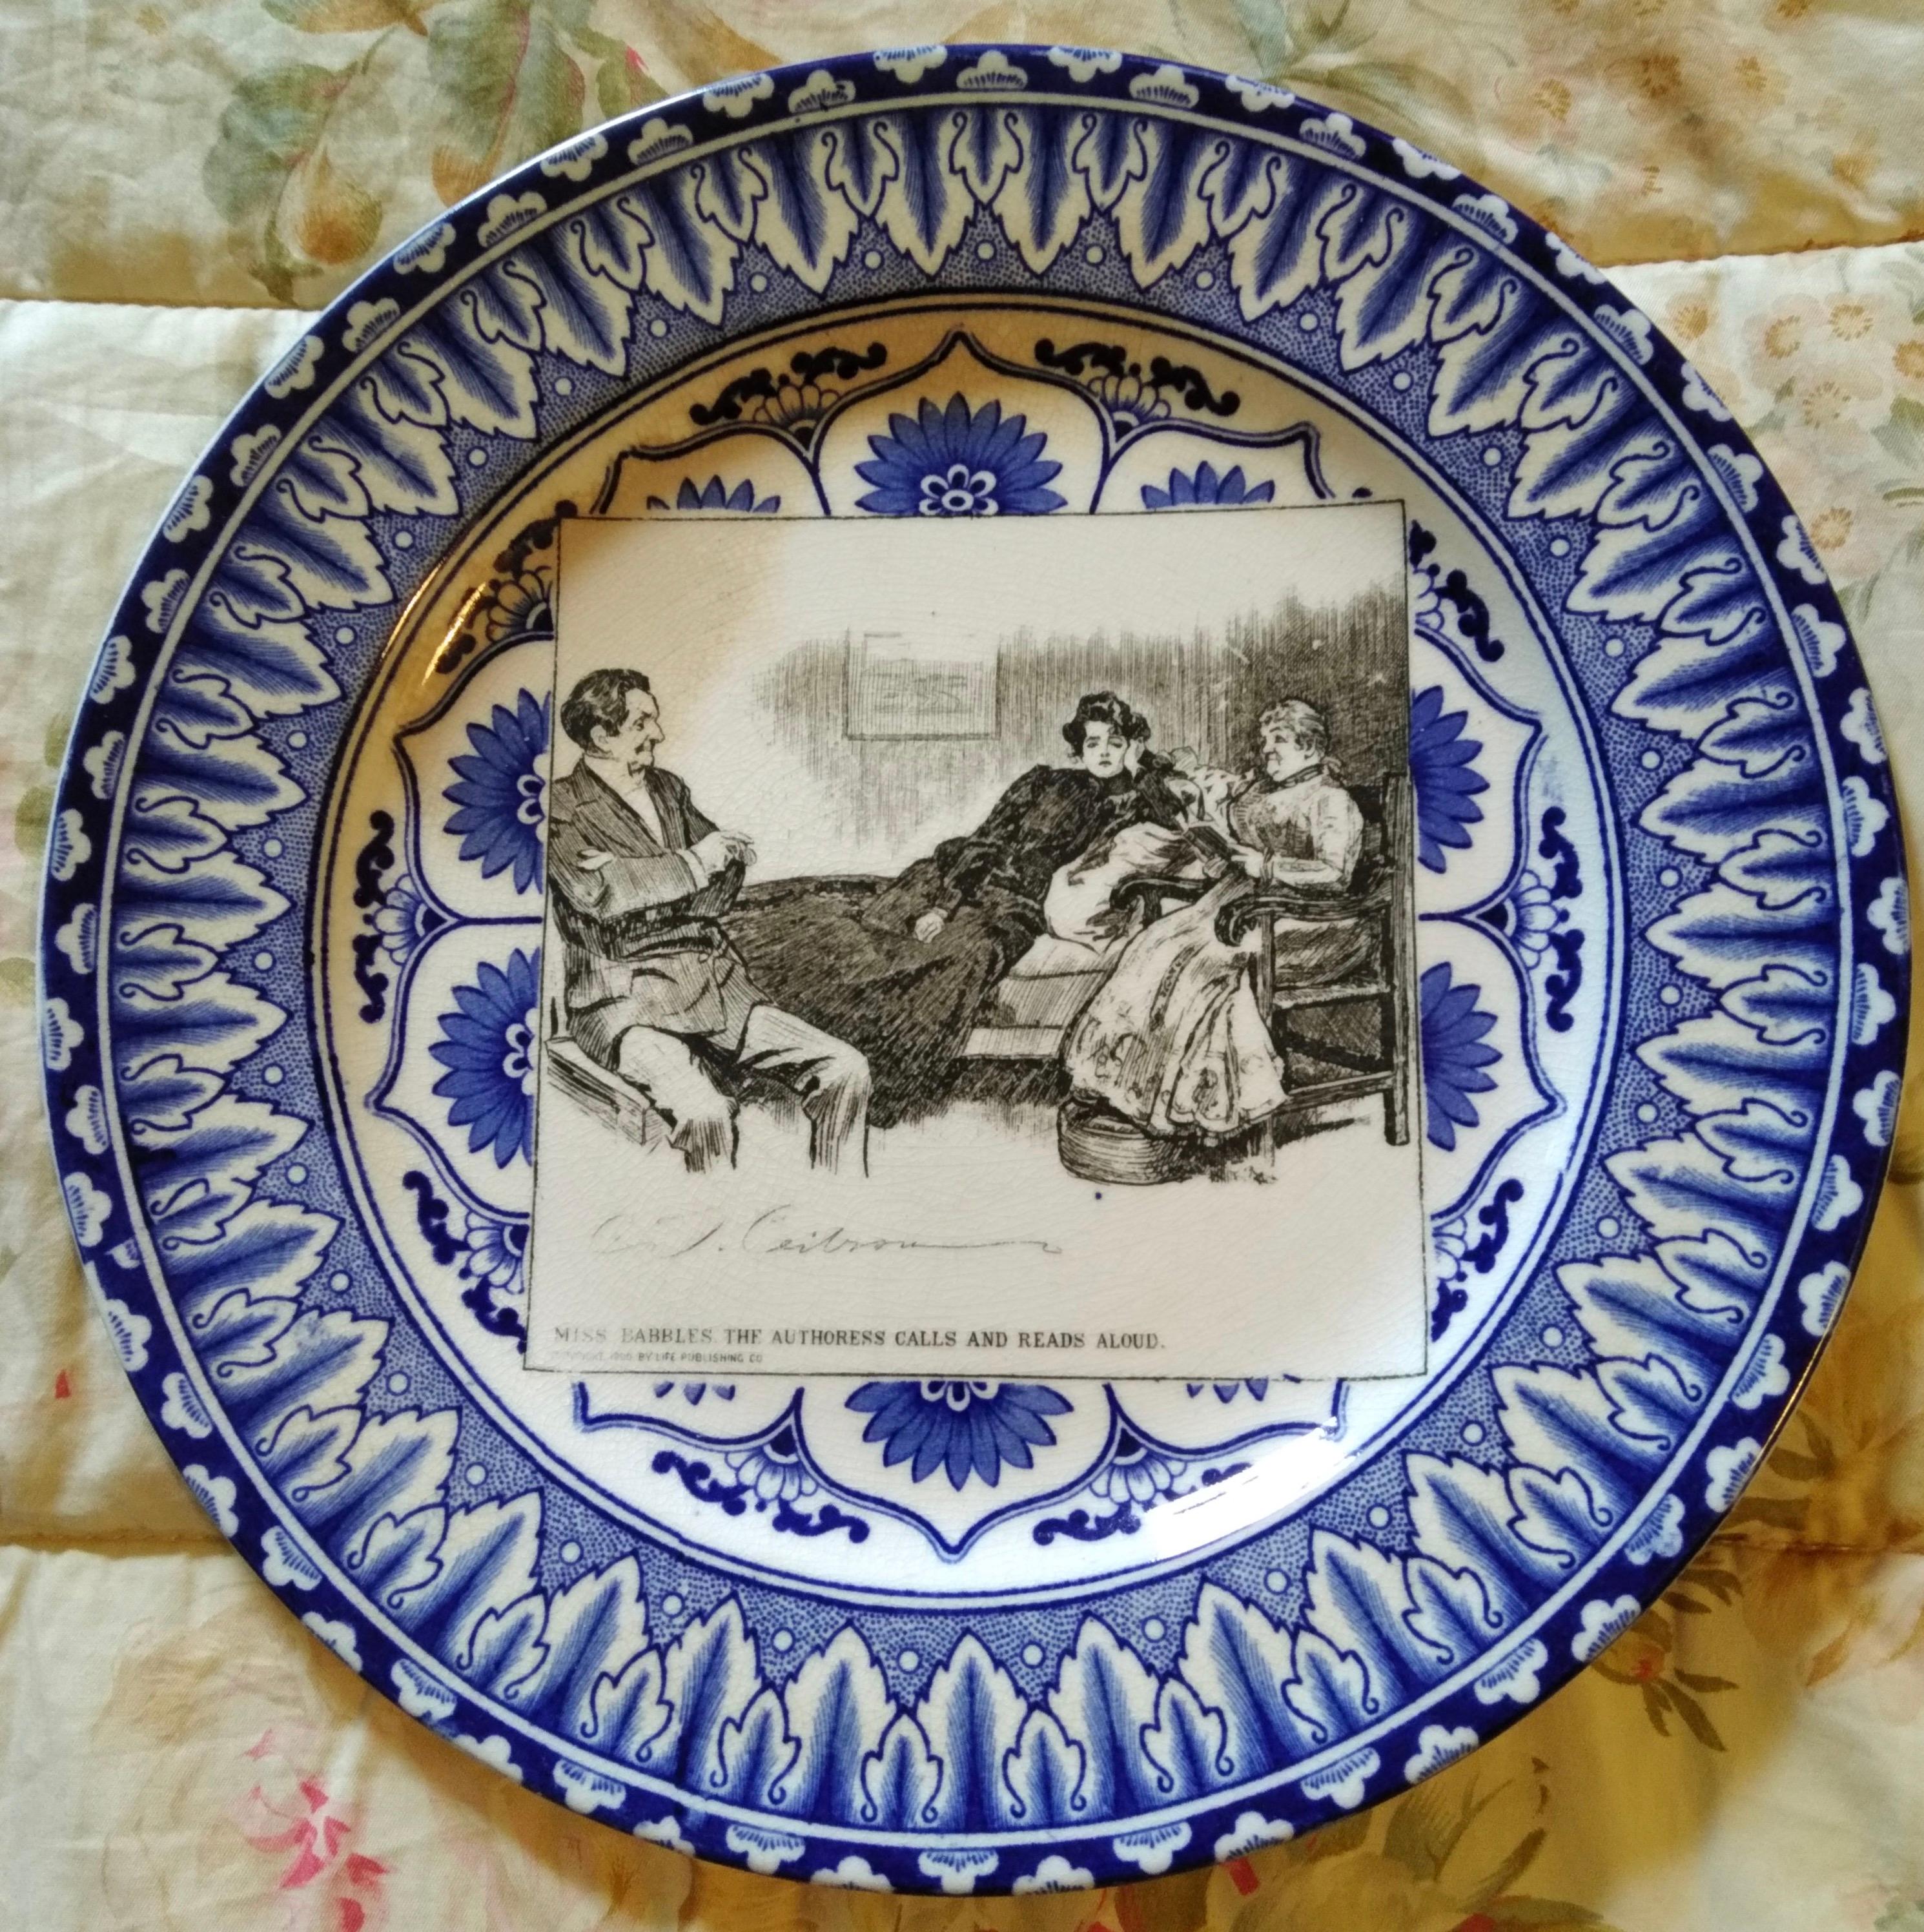 Ceramic Royal Doulton Decorative Plates Featuring Charles Dana Gibson Illustrations